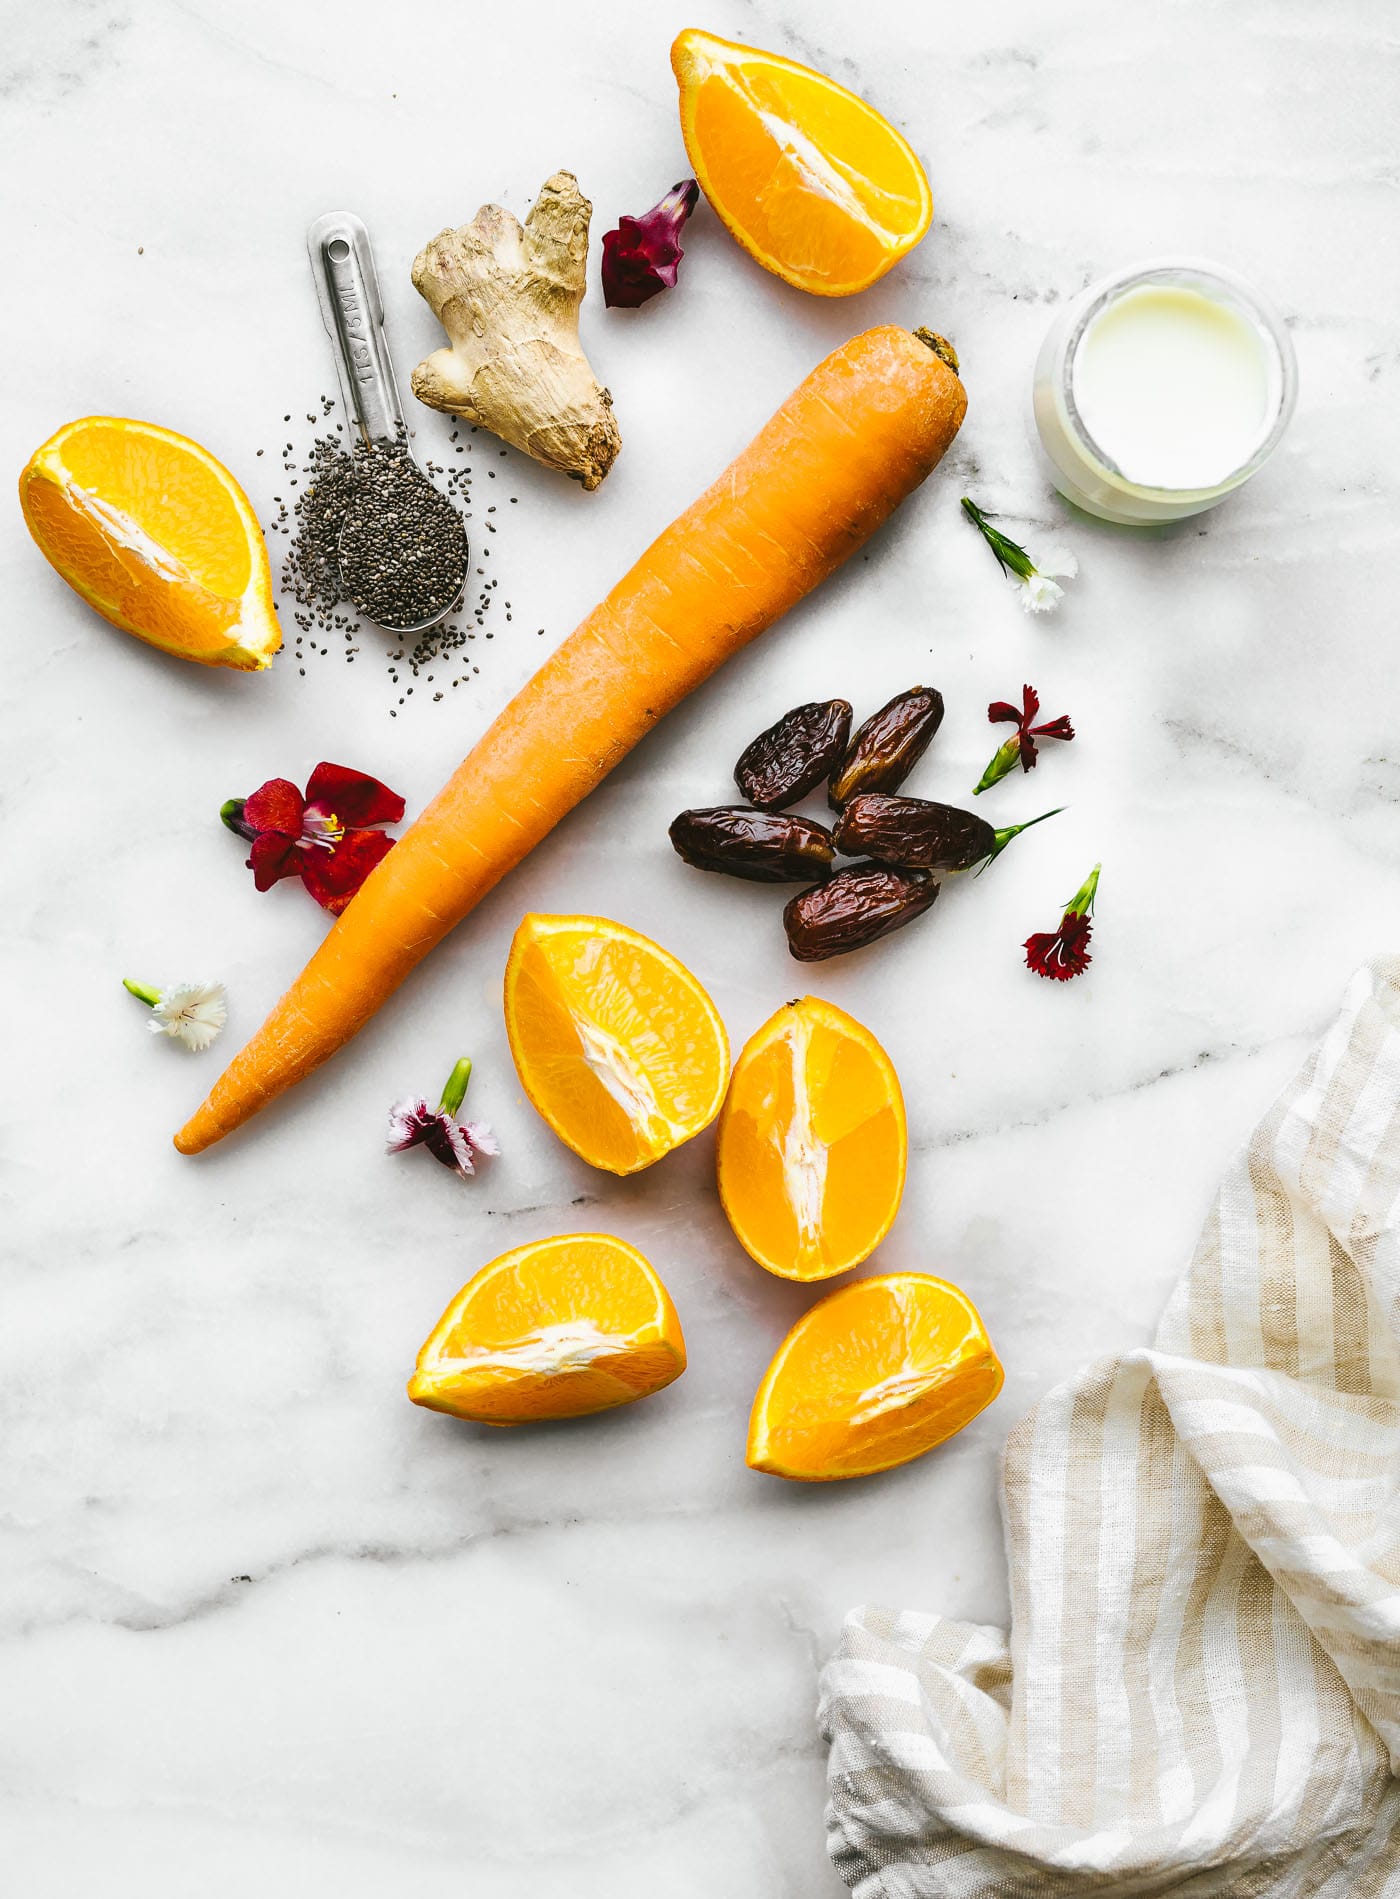 All ingredients for orange probiotic immunity boosting smoothie on marble countertop.